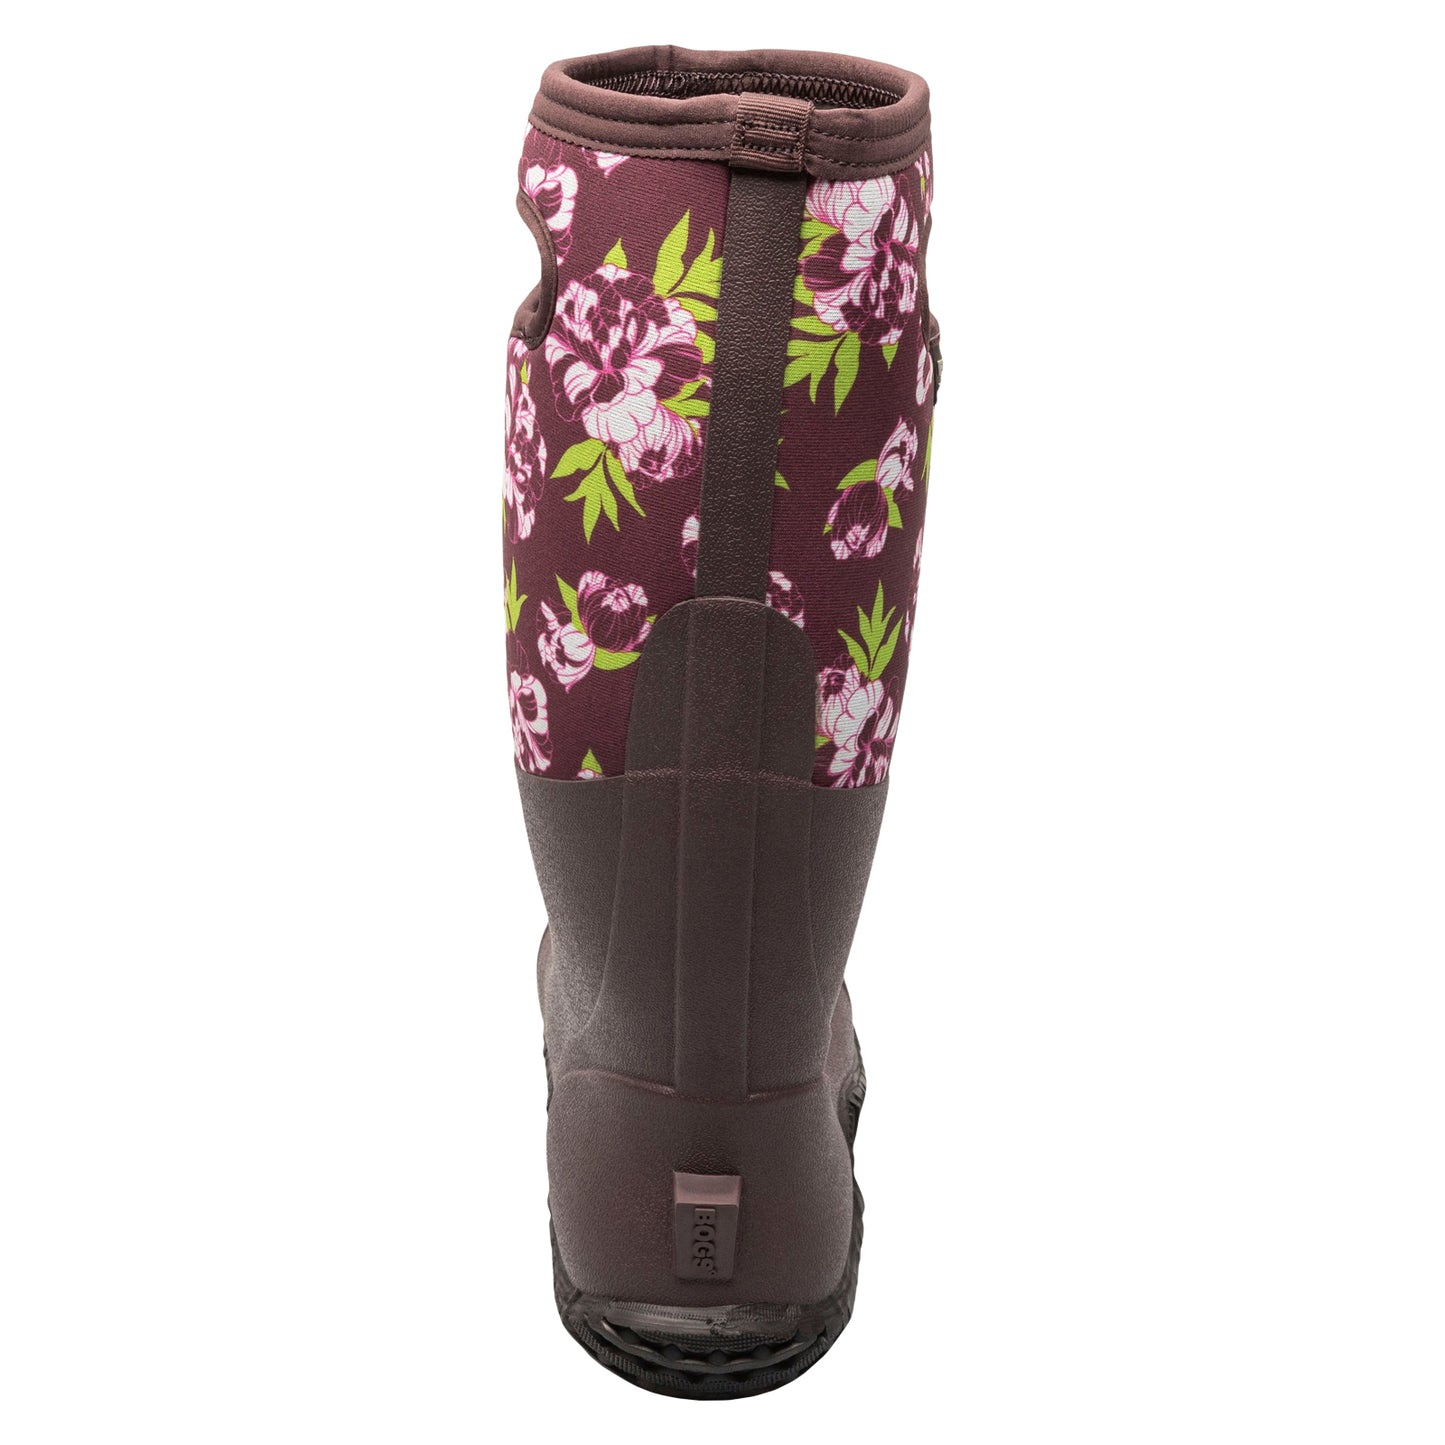 BOGS Ladies Mesa Peony Burgundy Waterproof Floral Insulated Gardening Boots